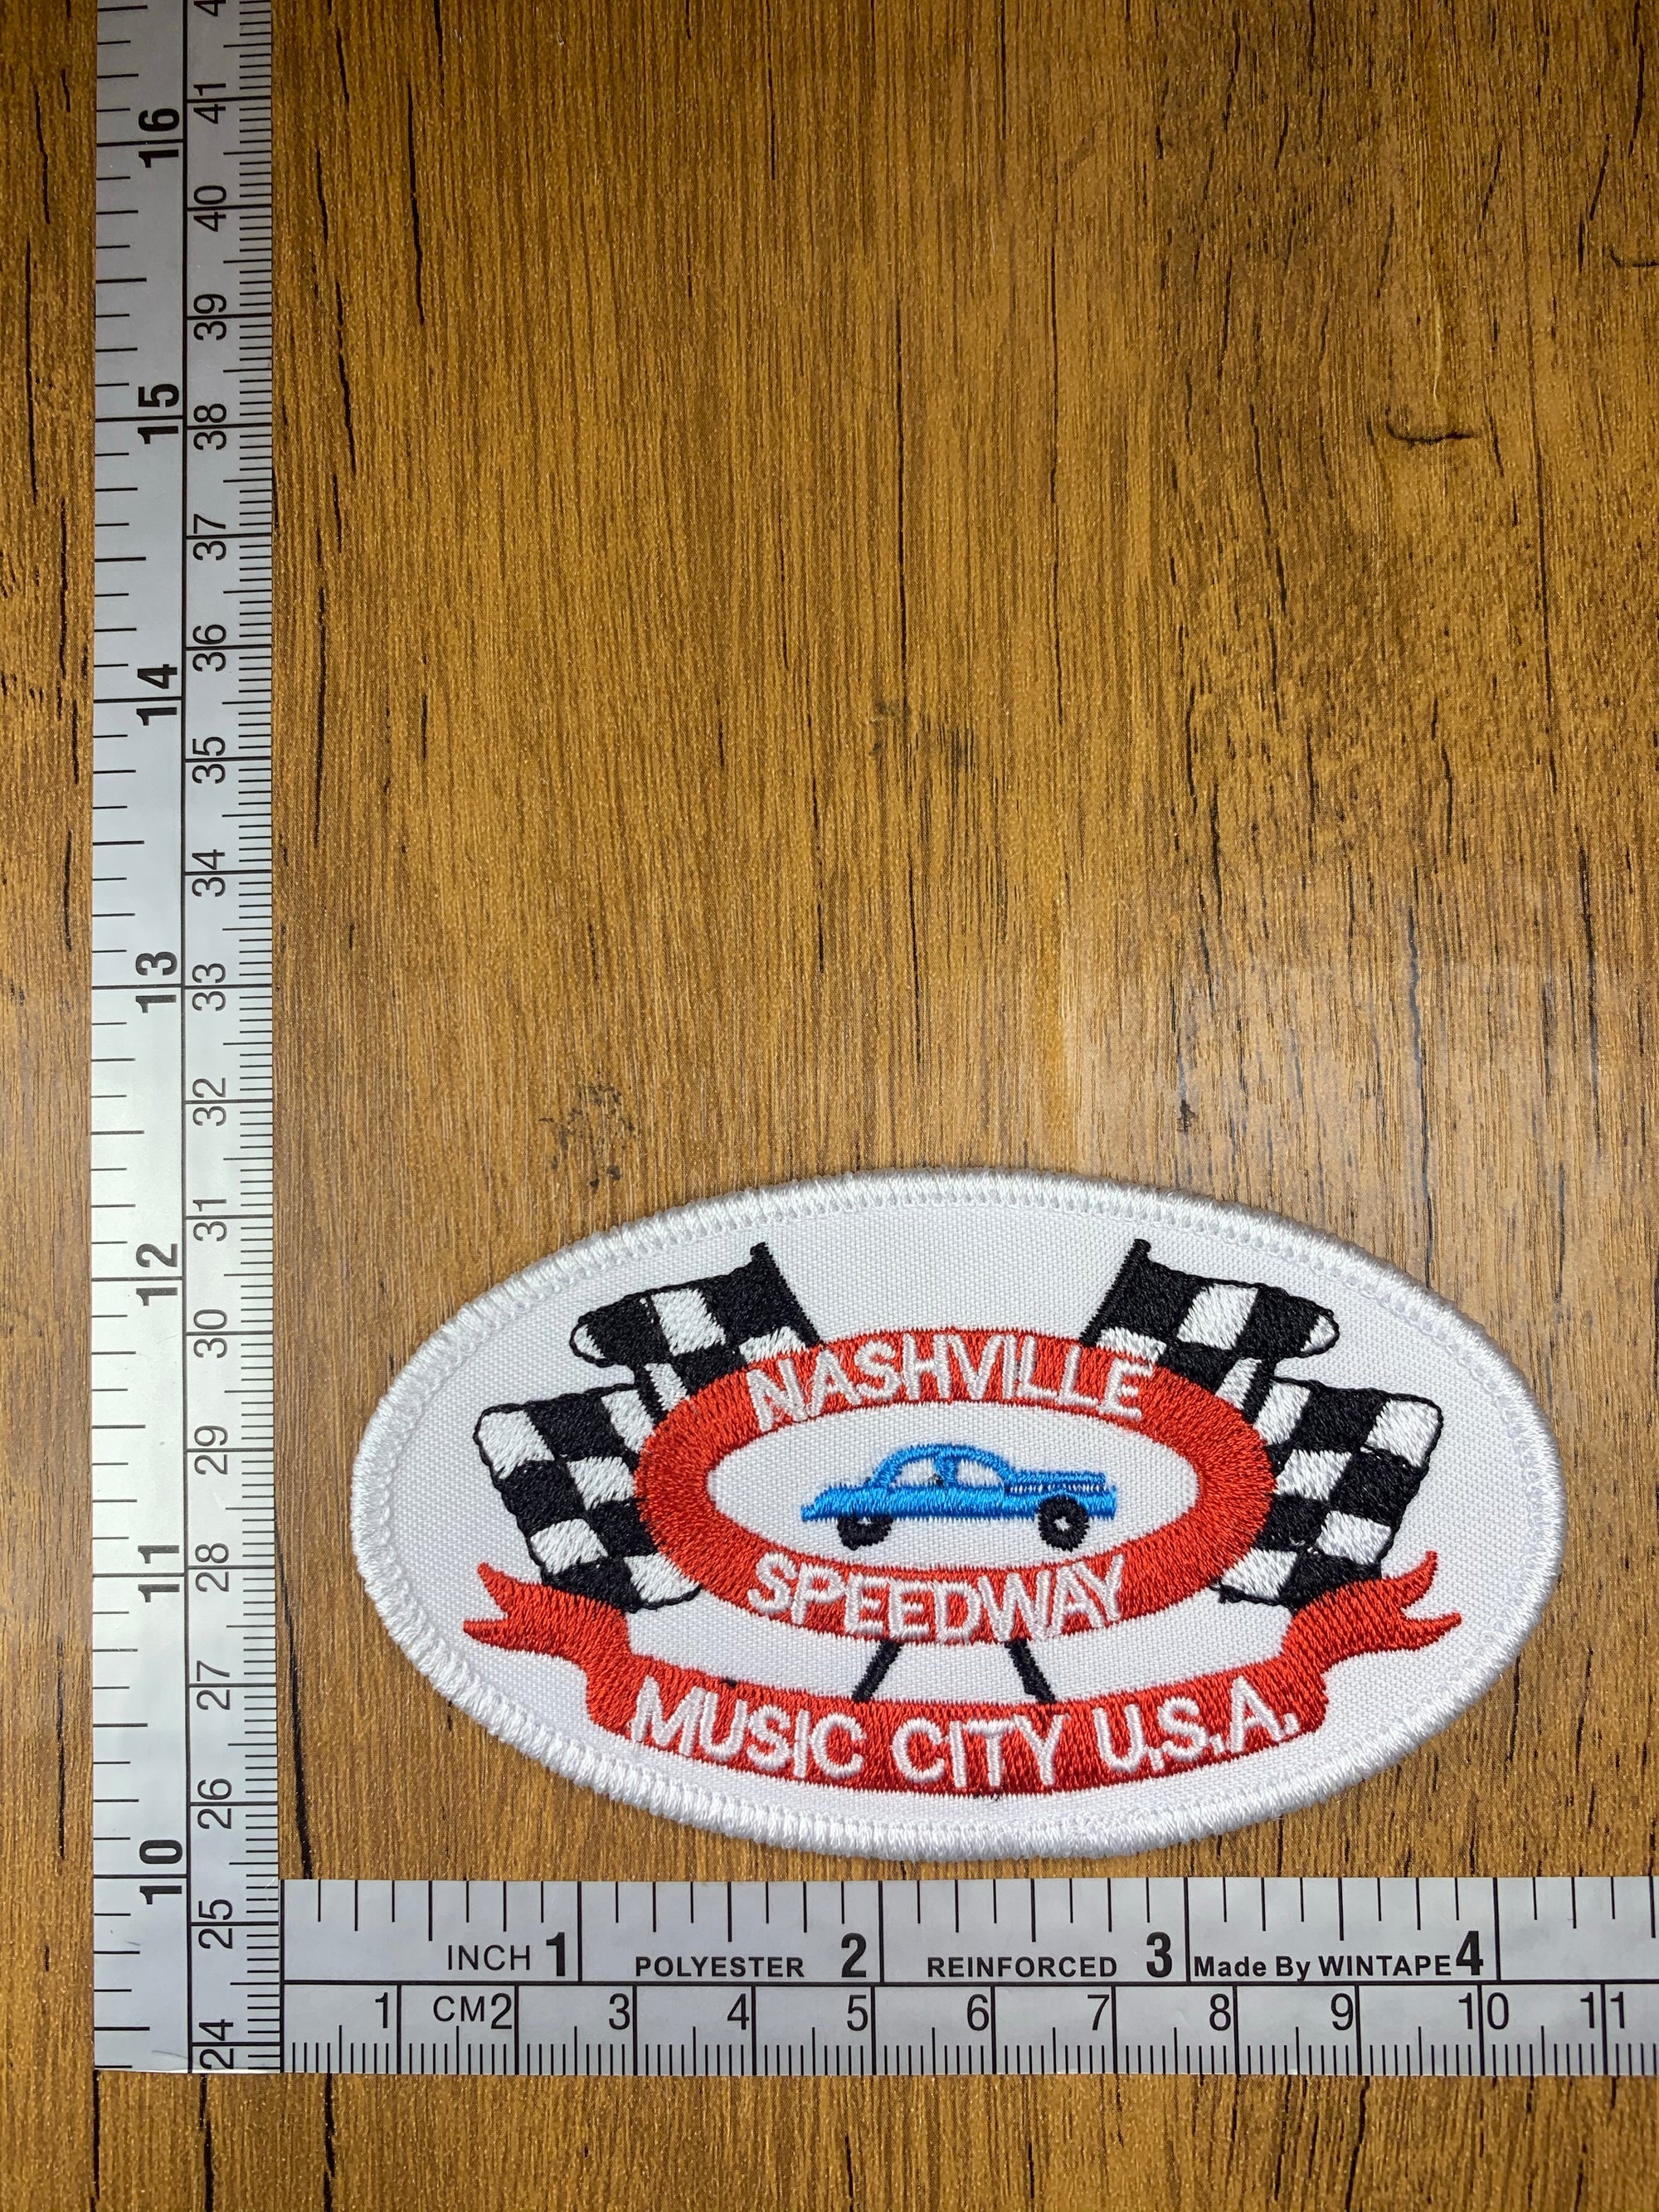 Nashville Speedway Music City USA